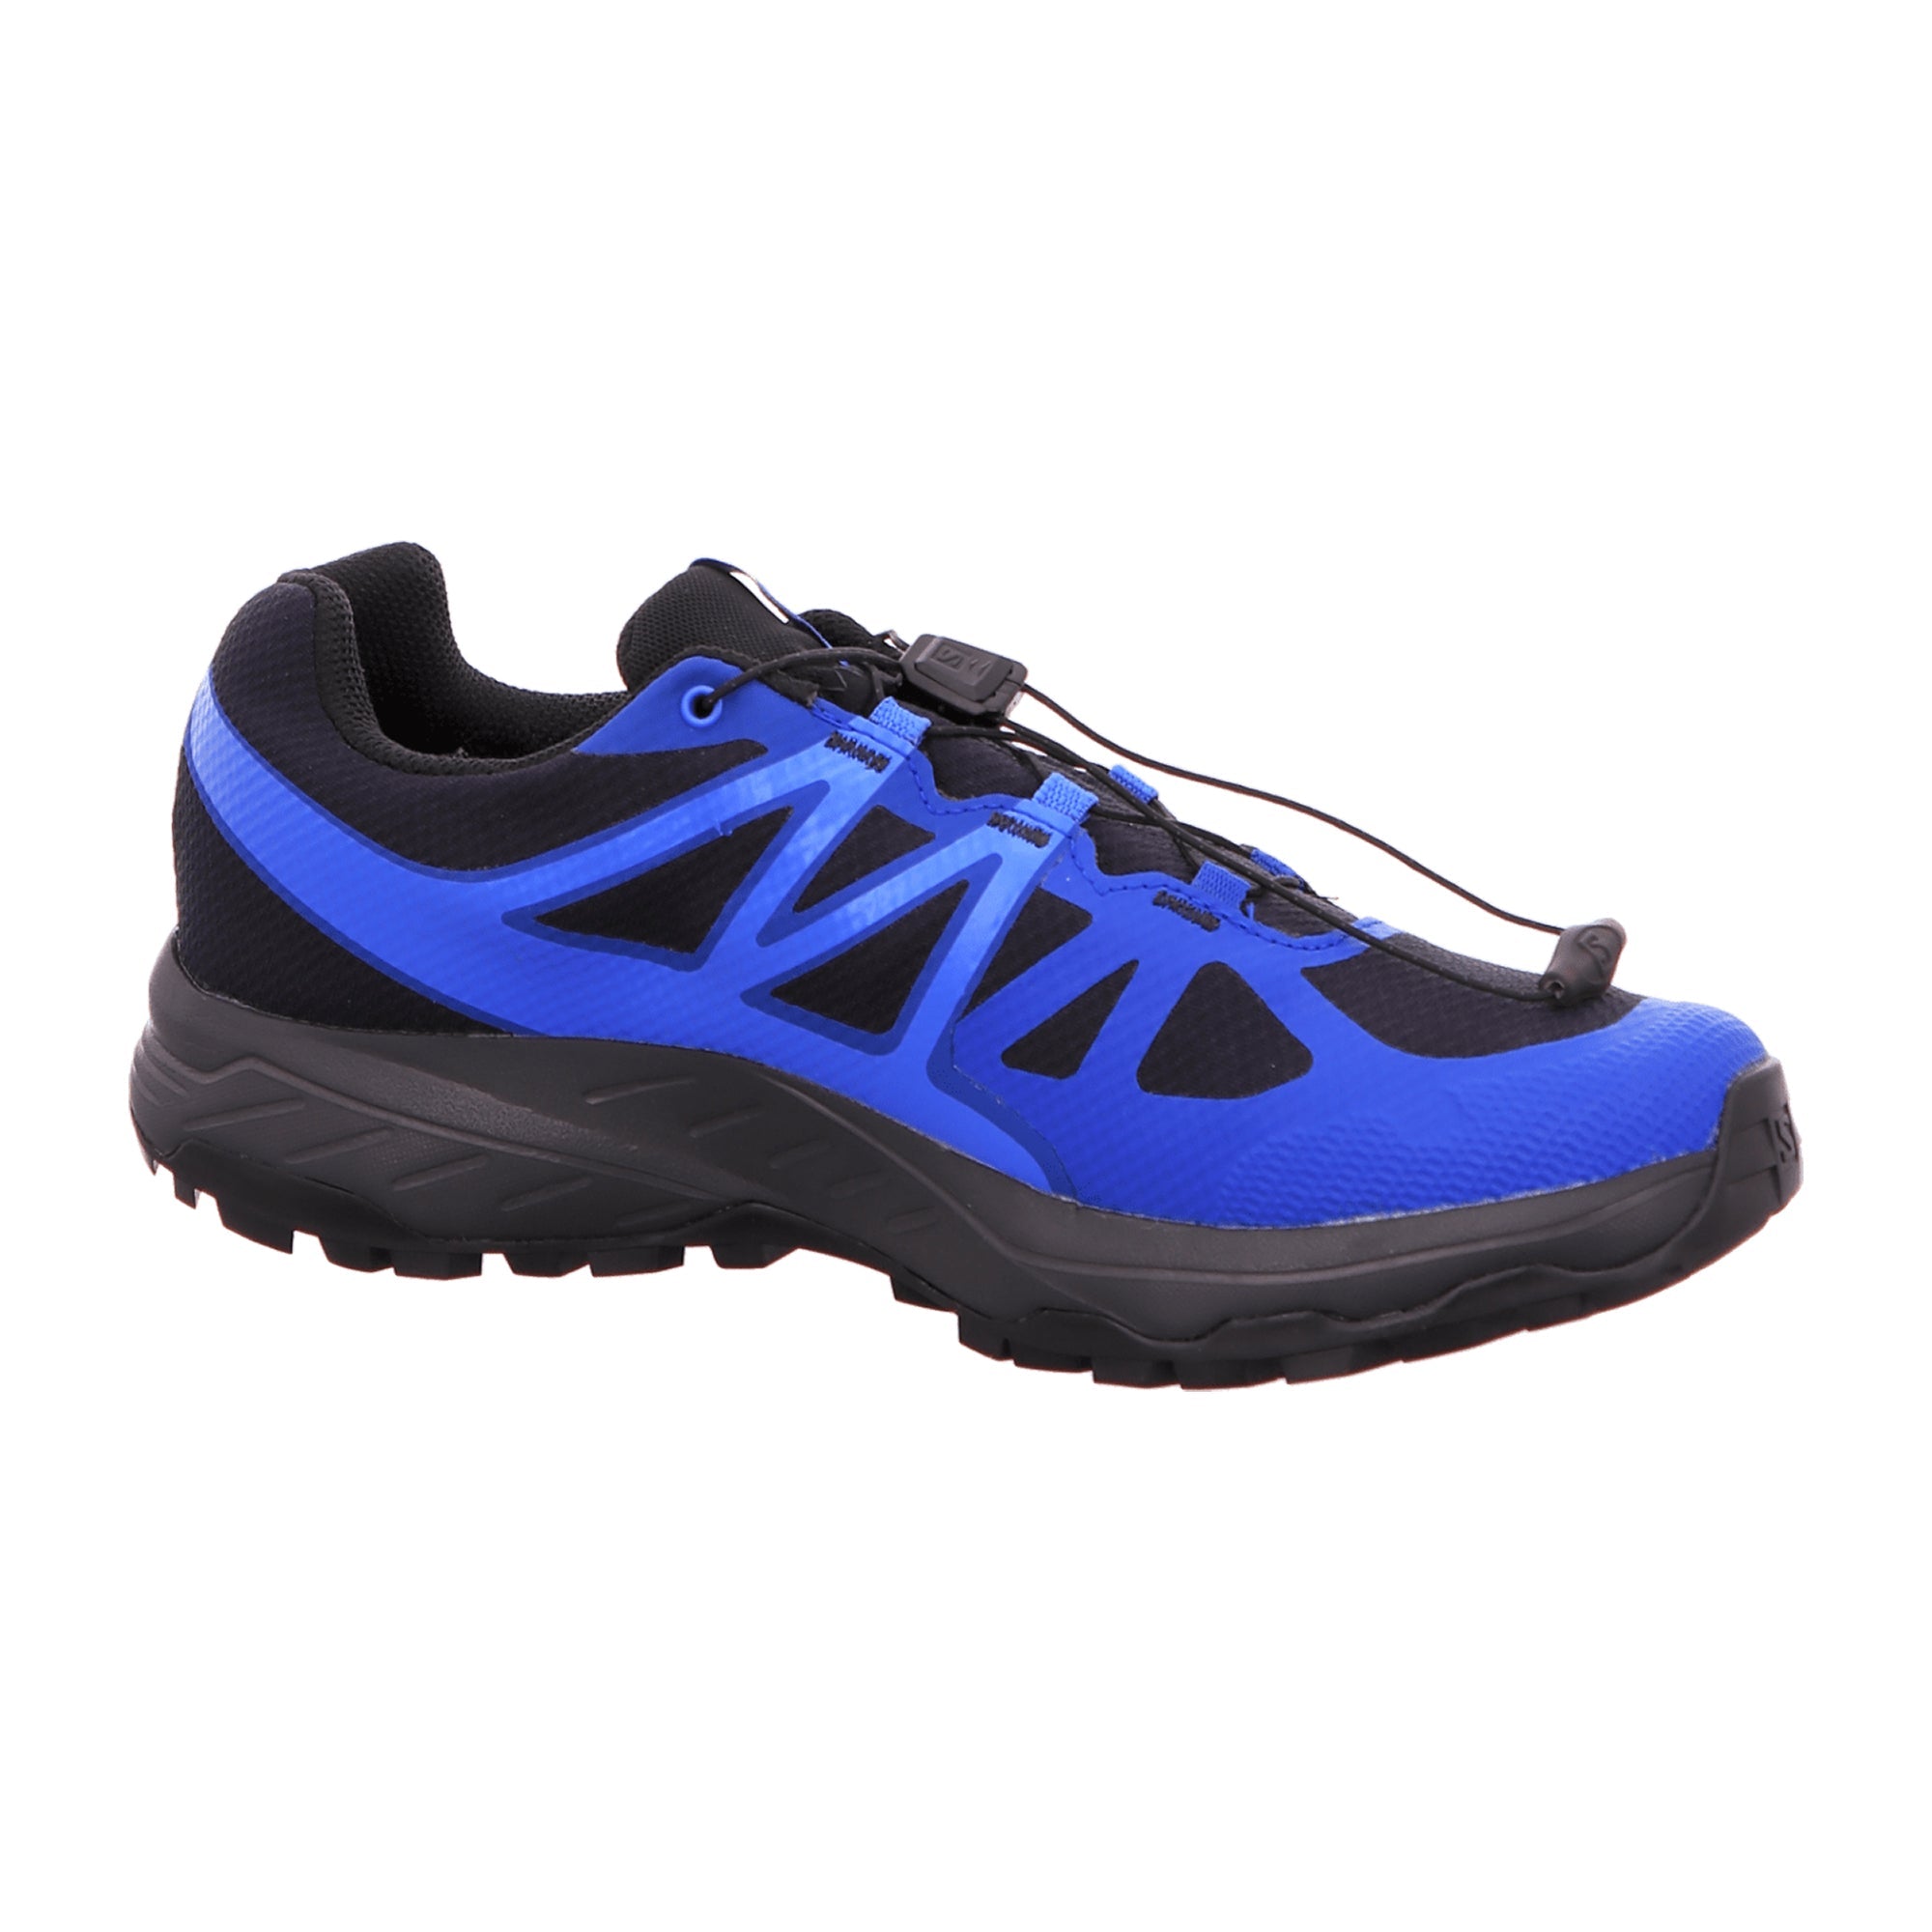 Salomon shoes XA SIWA GTX Nisk/Turquoise for men, blue